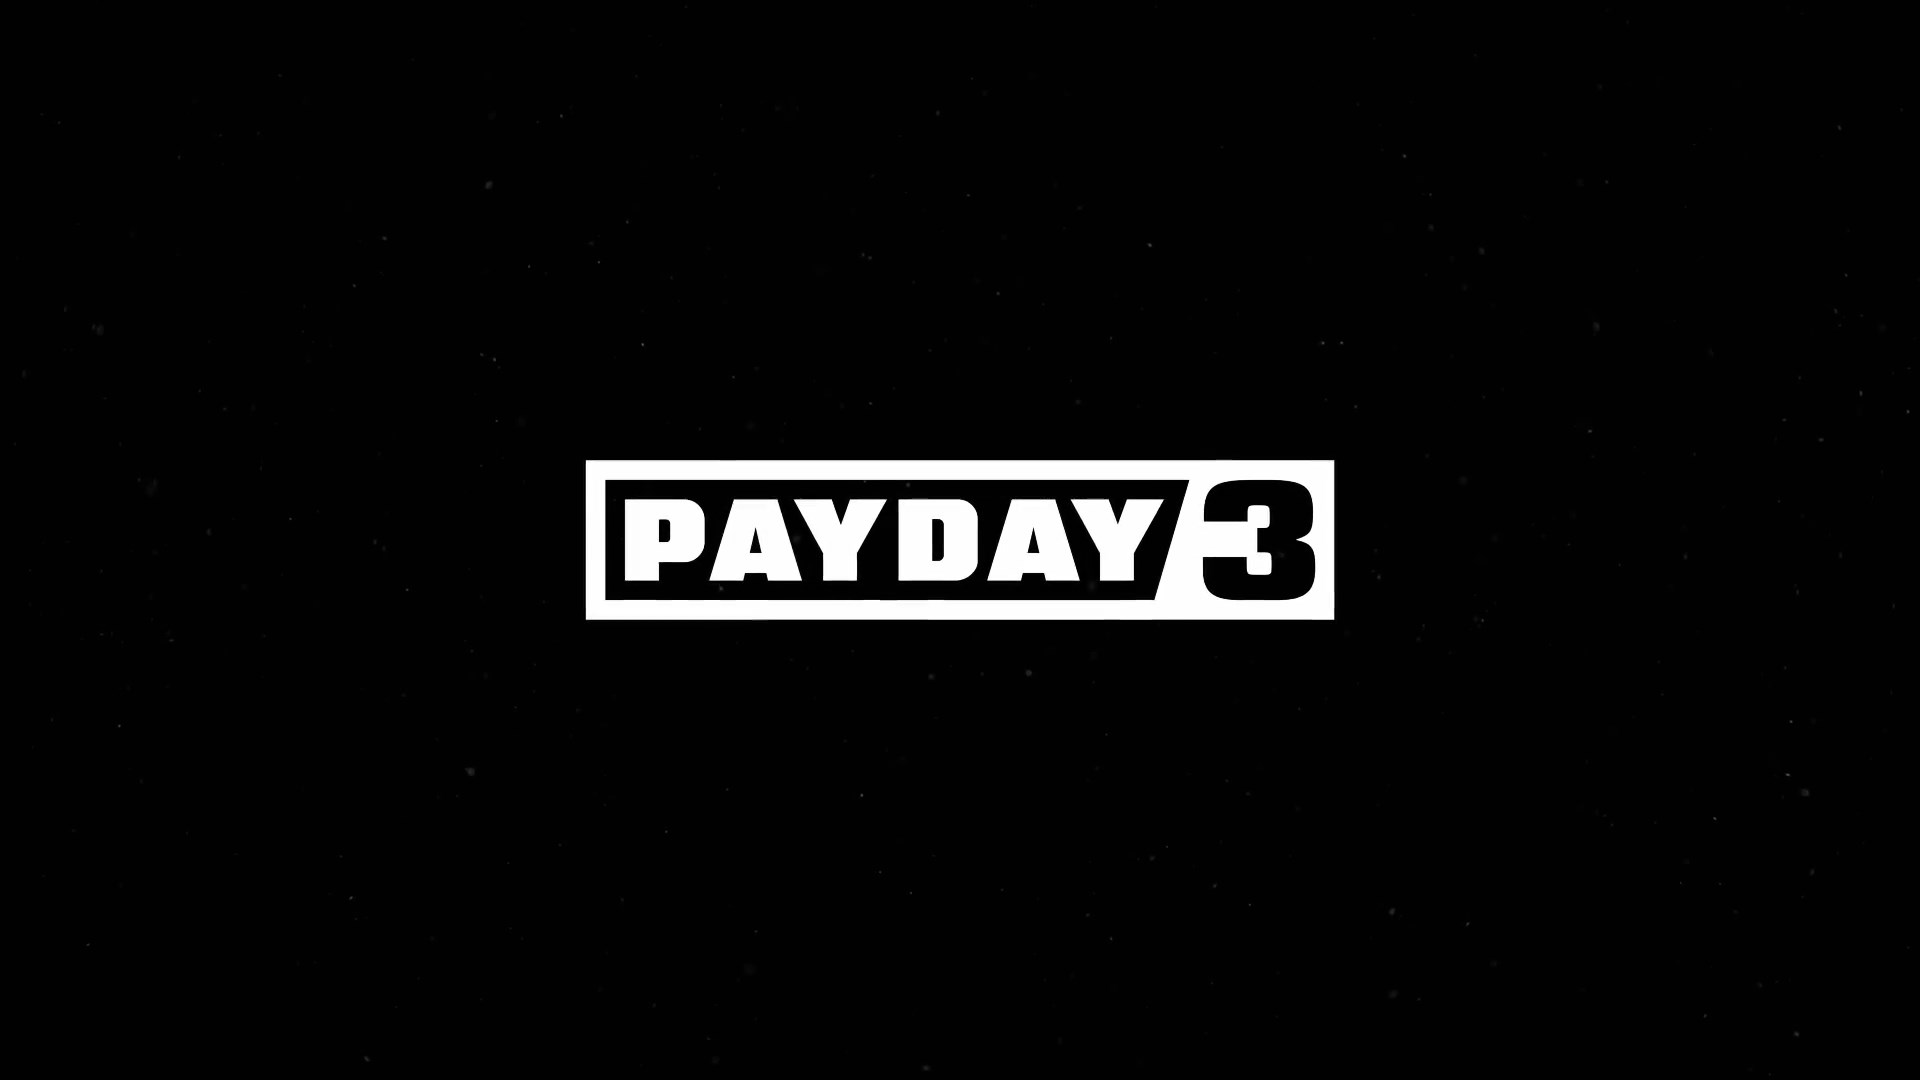 Payday 3 Coming 2023 According To Developer - Gameranx